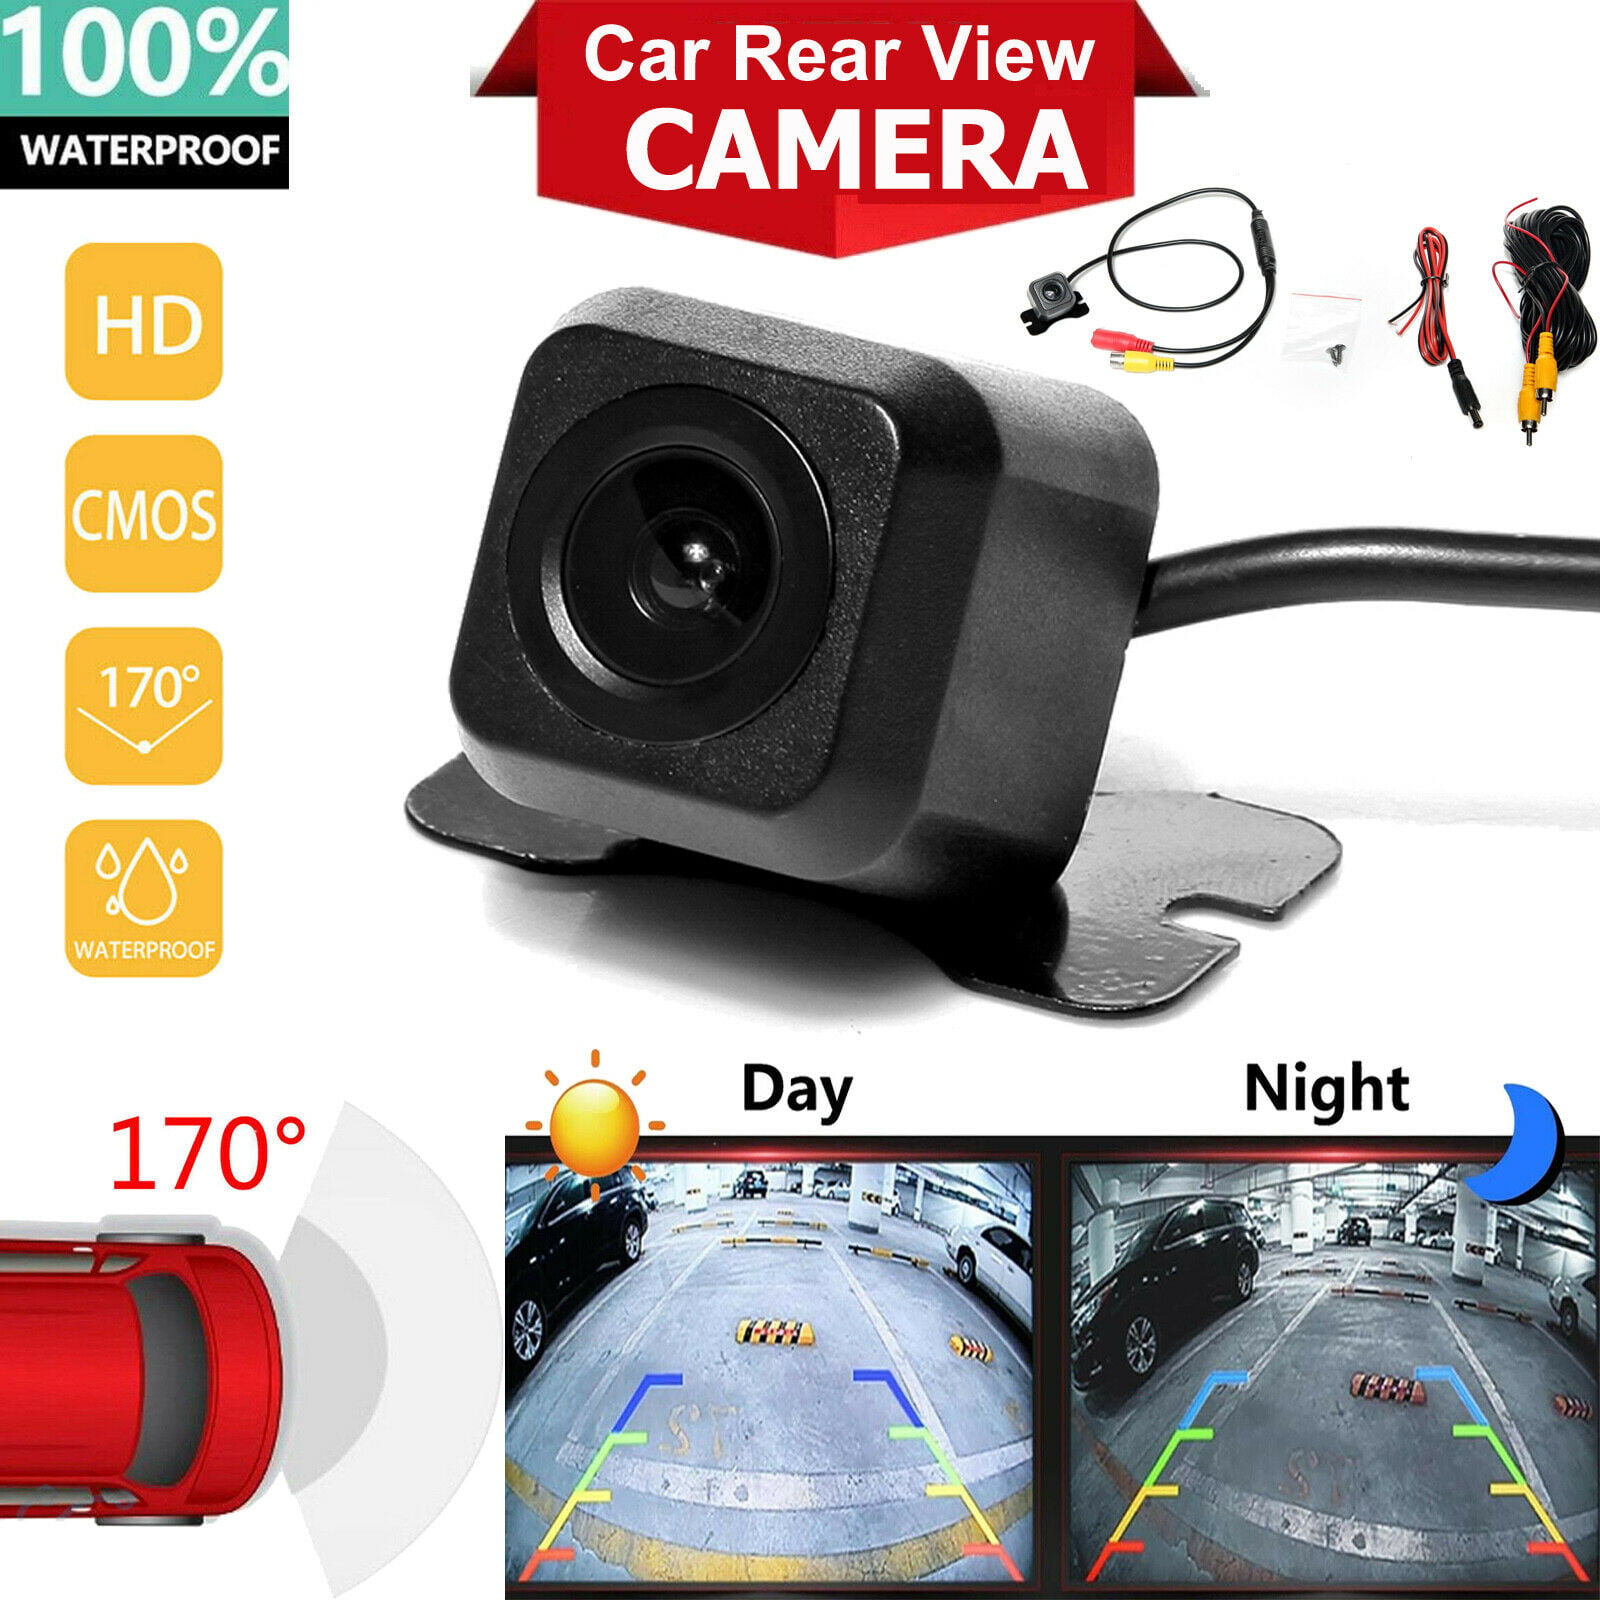 HD 170° Car Rear View Camera Parking Reverse Backup Cam Night Vision Waterproof 